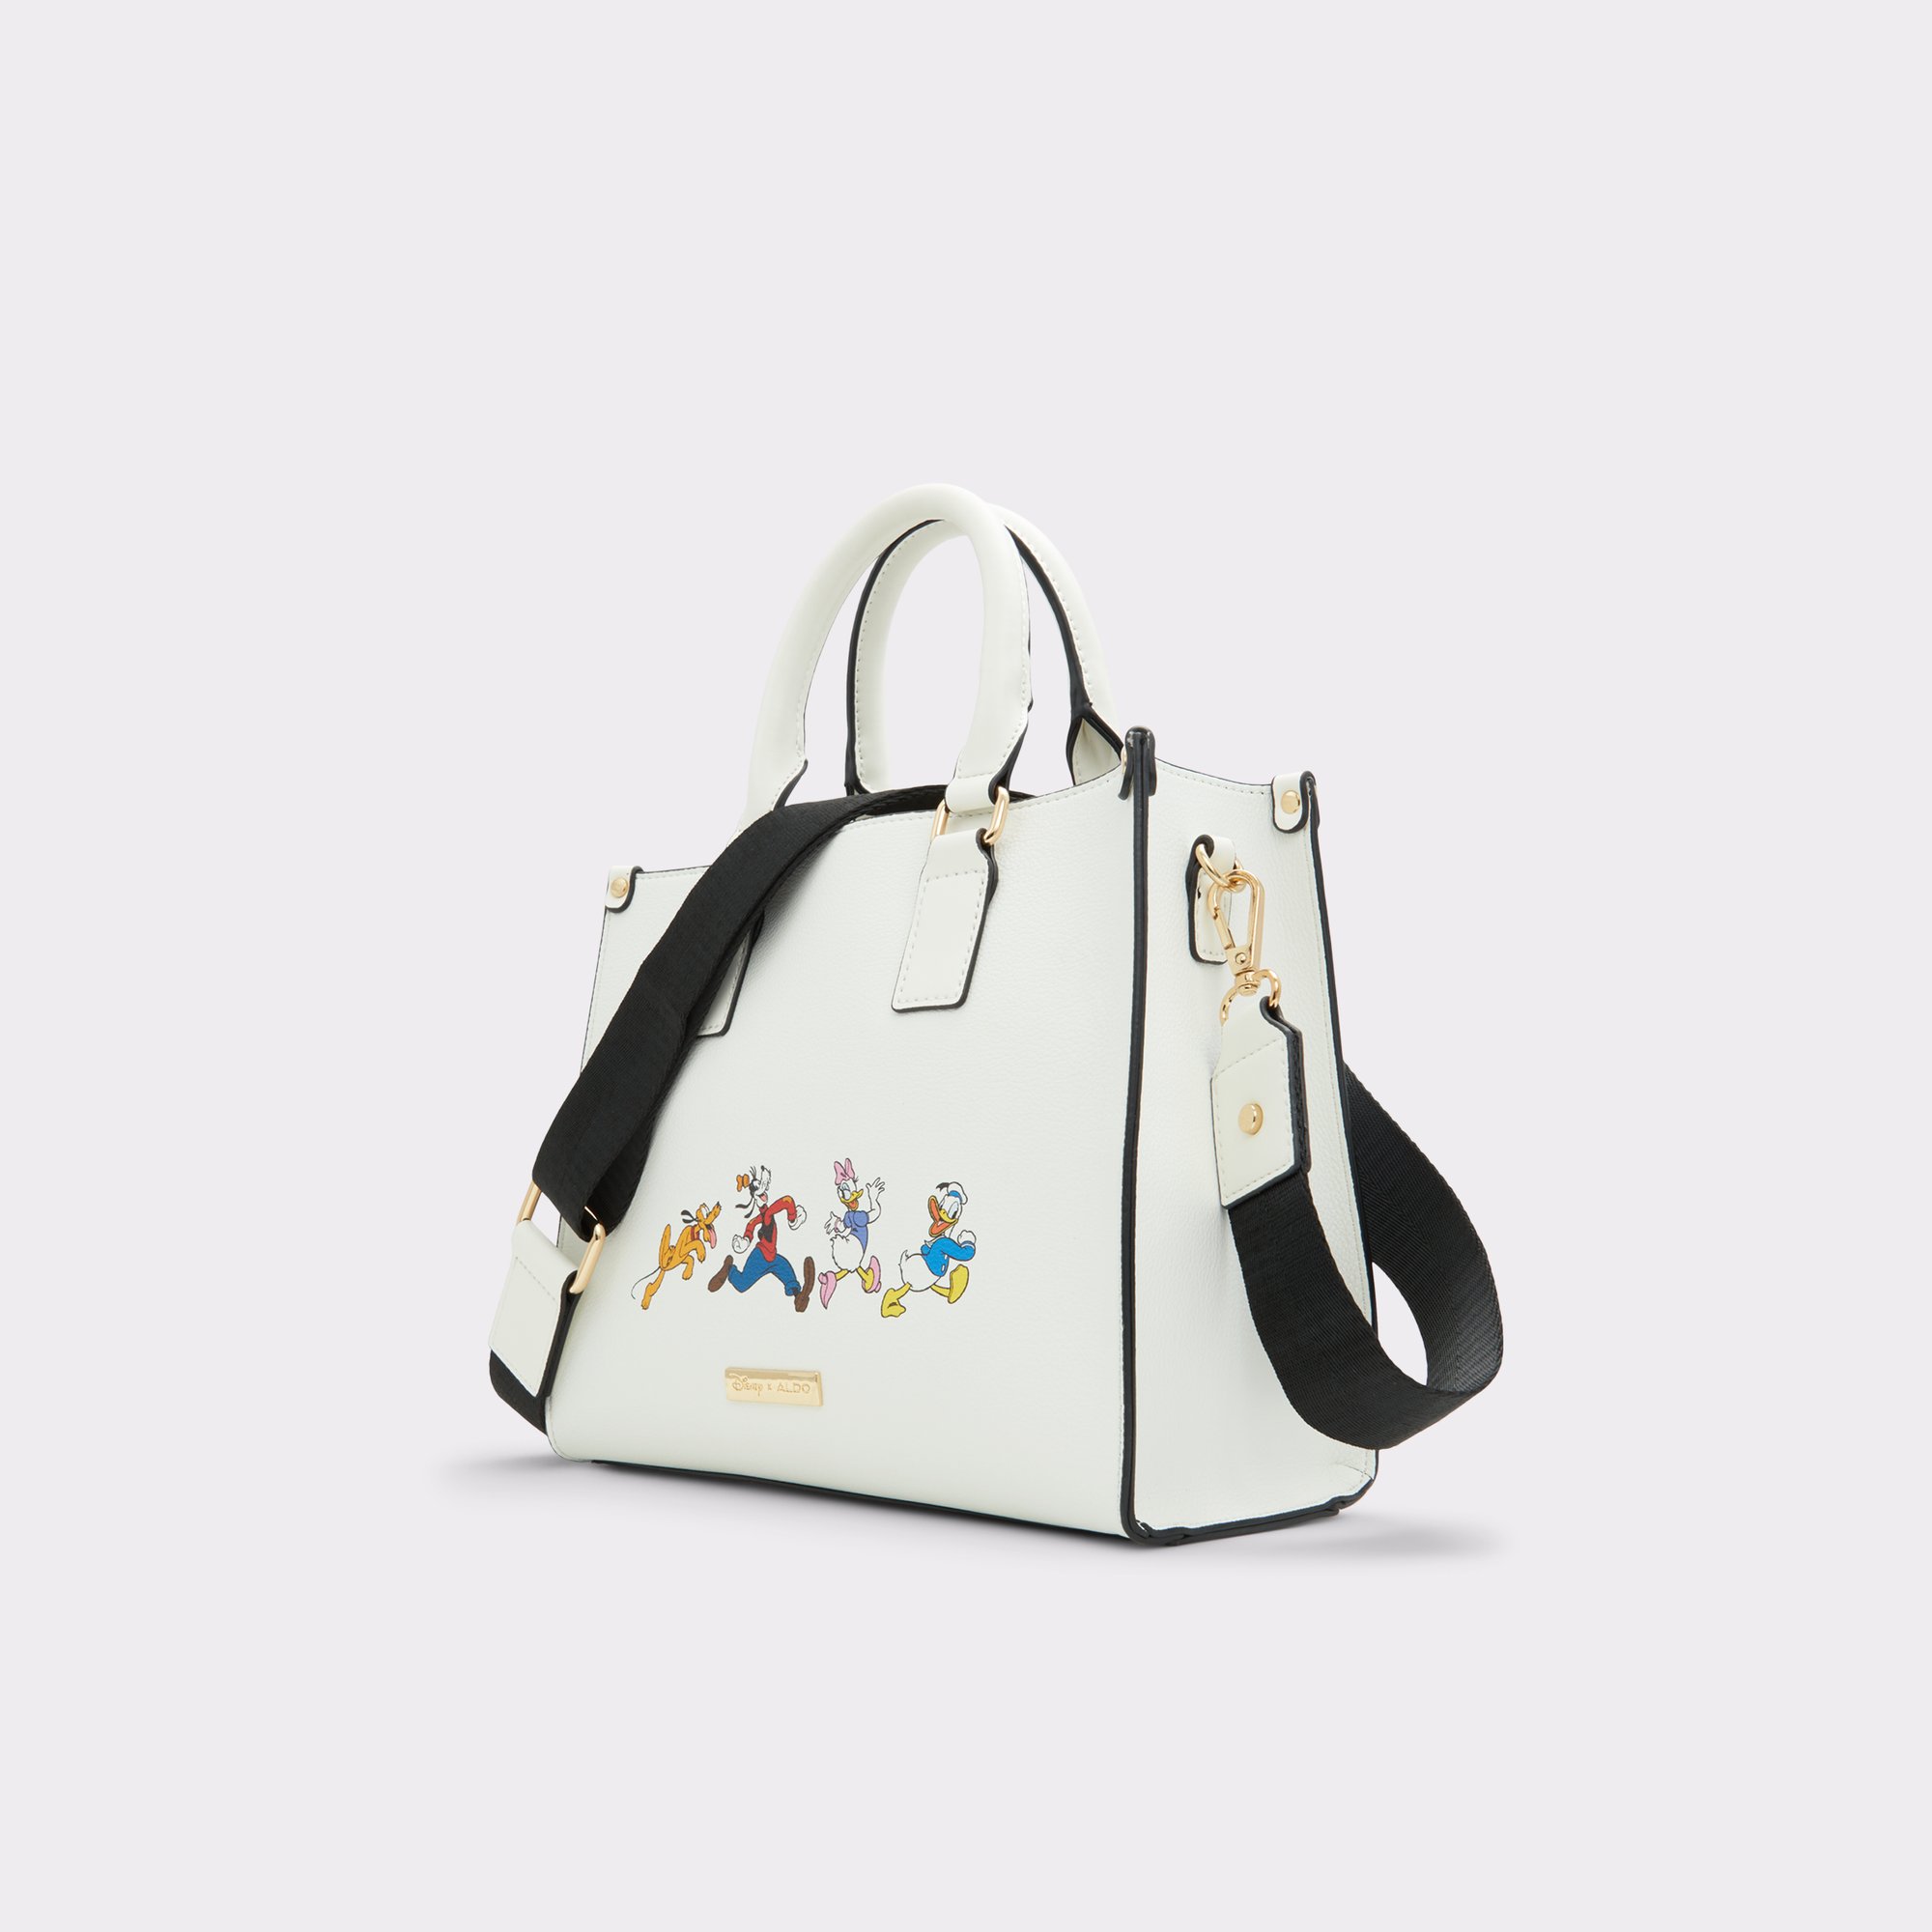 ALDO Handbags, Purses & Wallets for Women